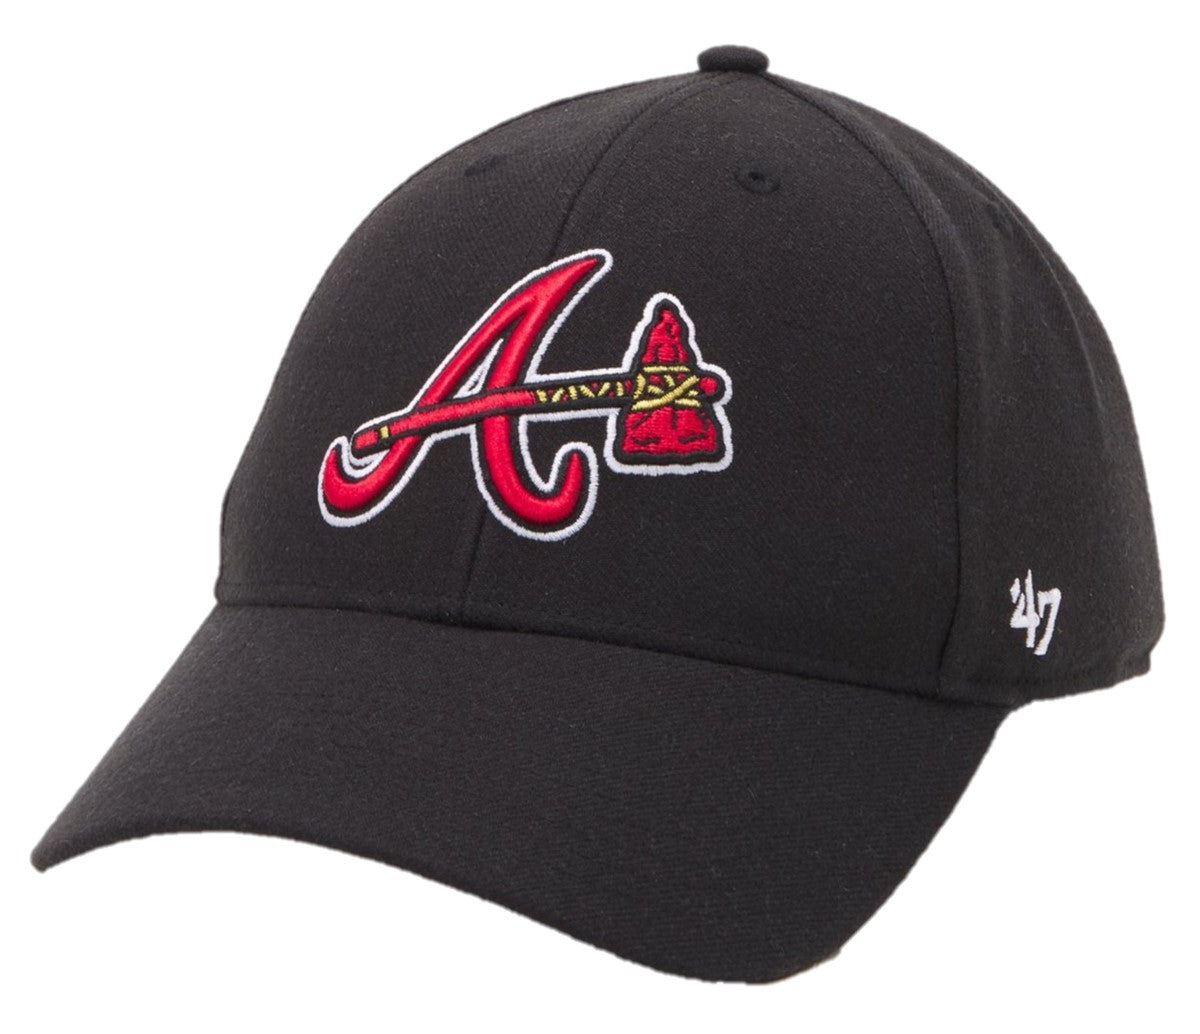 Baseballkappe – Atlanta Braves – verstellbar – Erwachsene